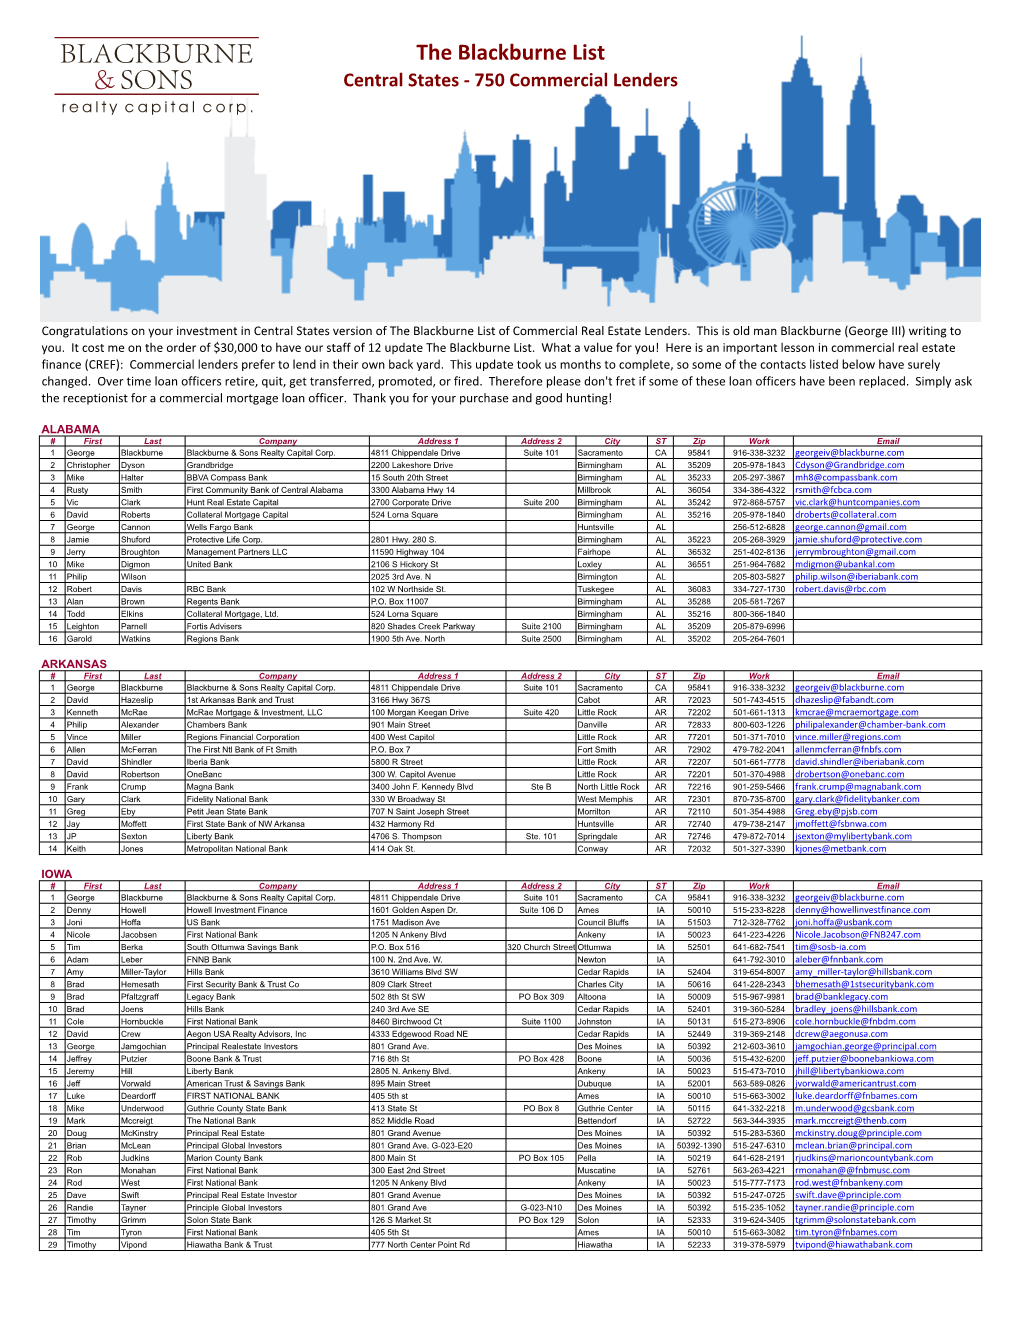 Blackburne List Central States - 750 Commercial Lenders